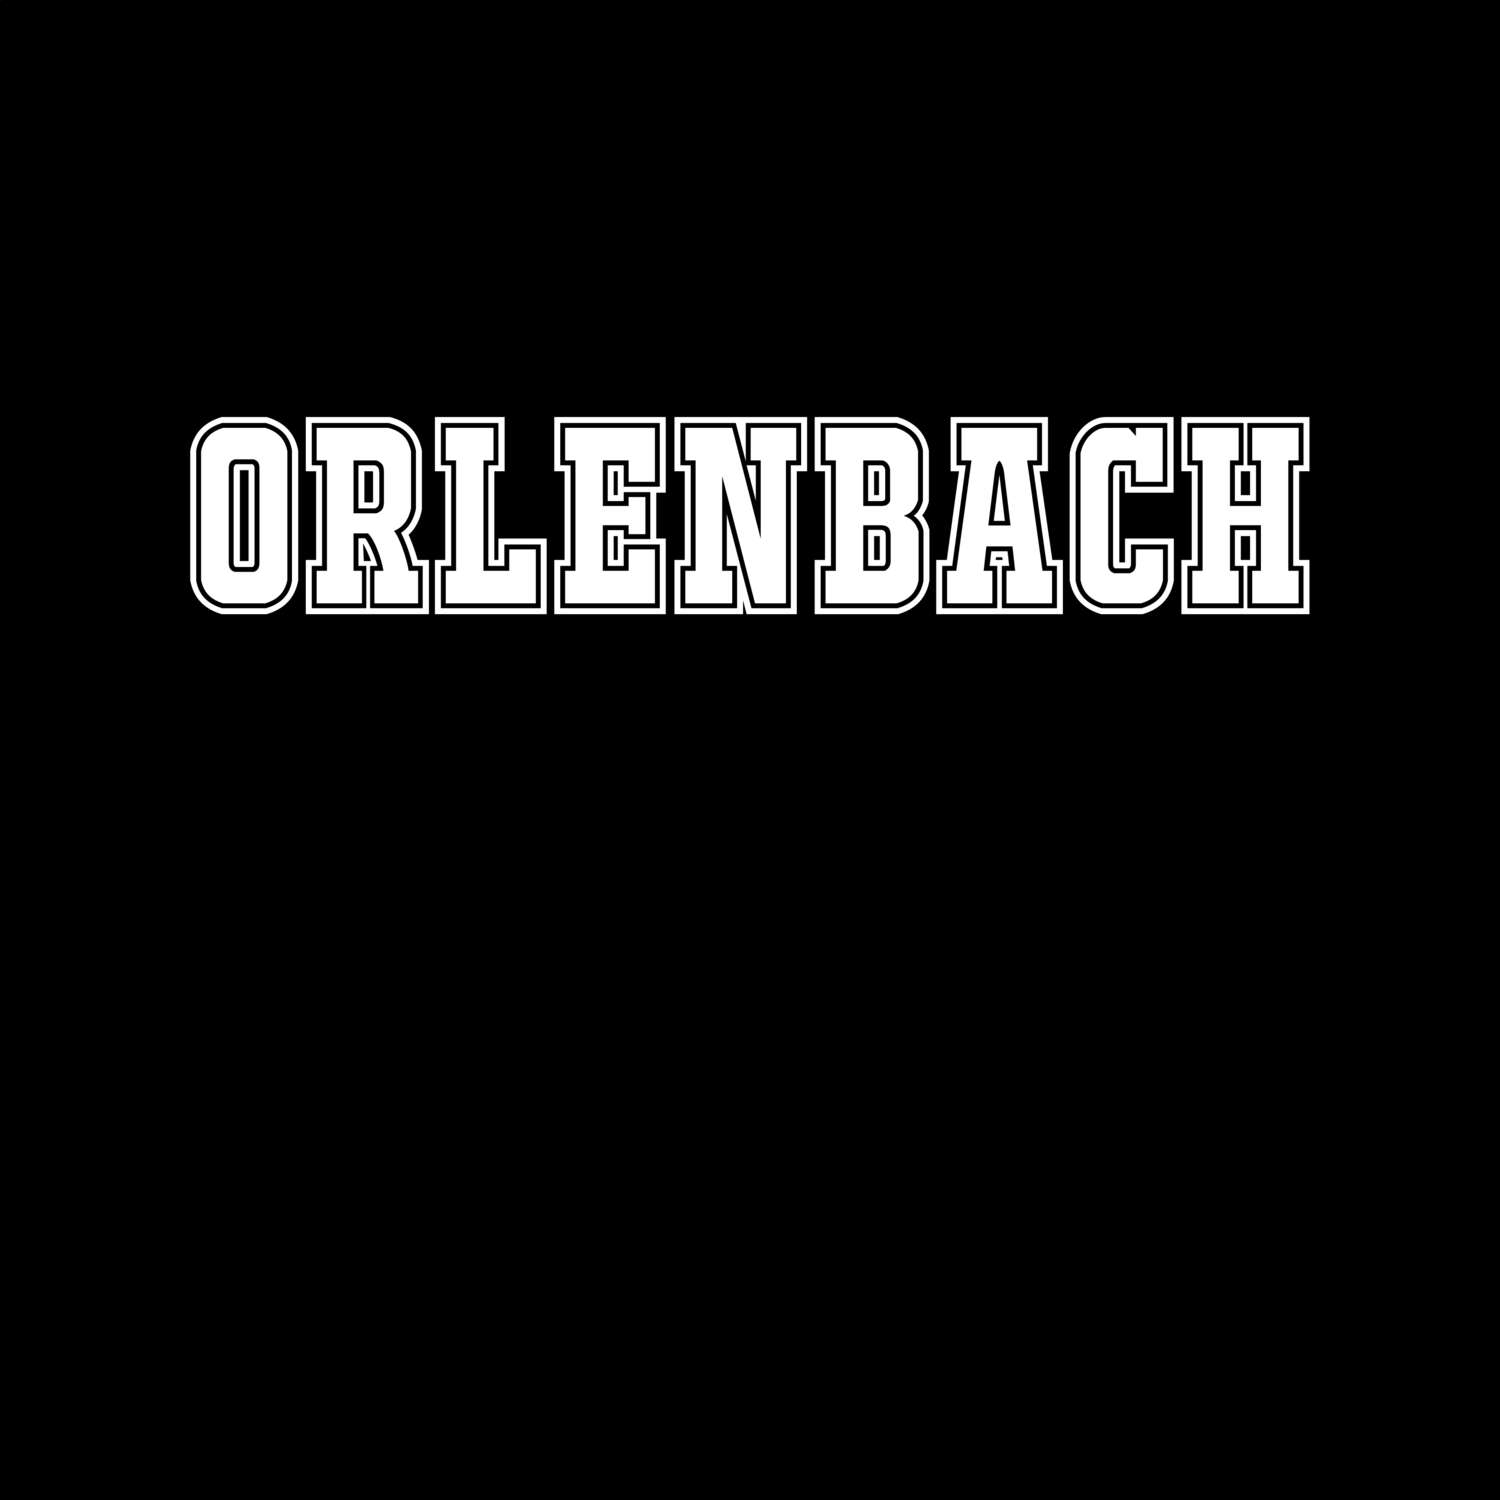 Orlenbach T-Shirt »Classic«